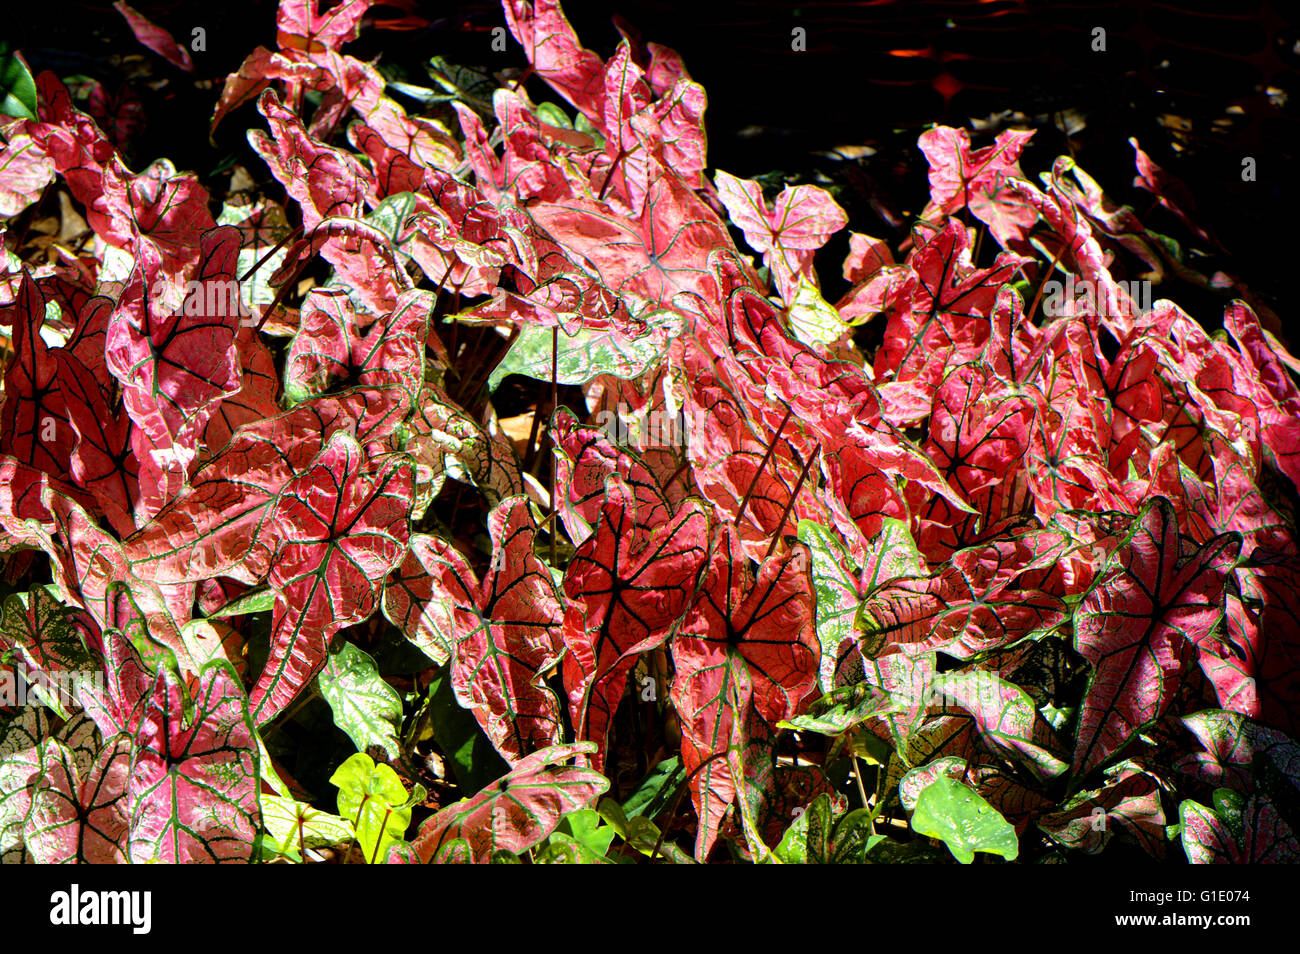 Angel wings foliage Latin name Caladium bicolor Rosebud Stock Photo